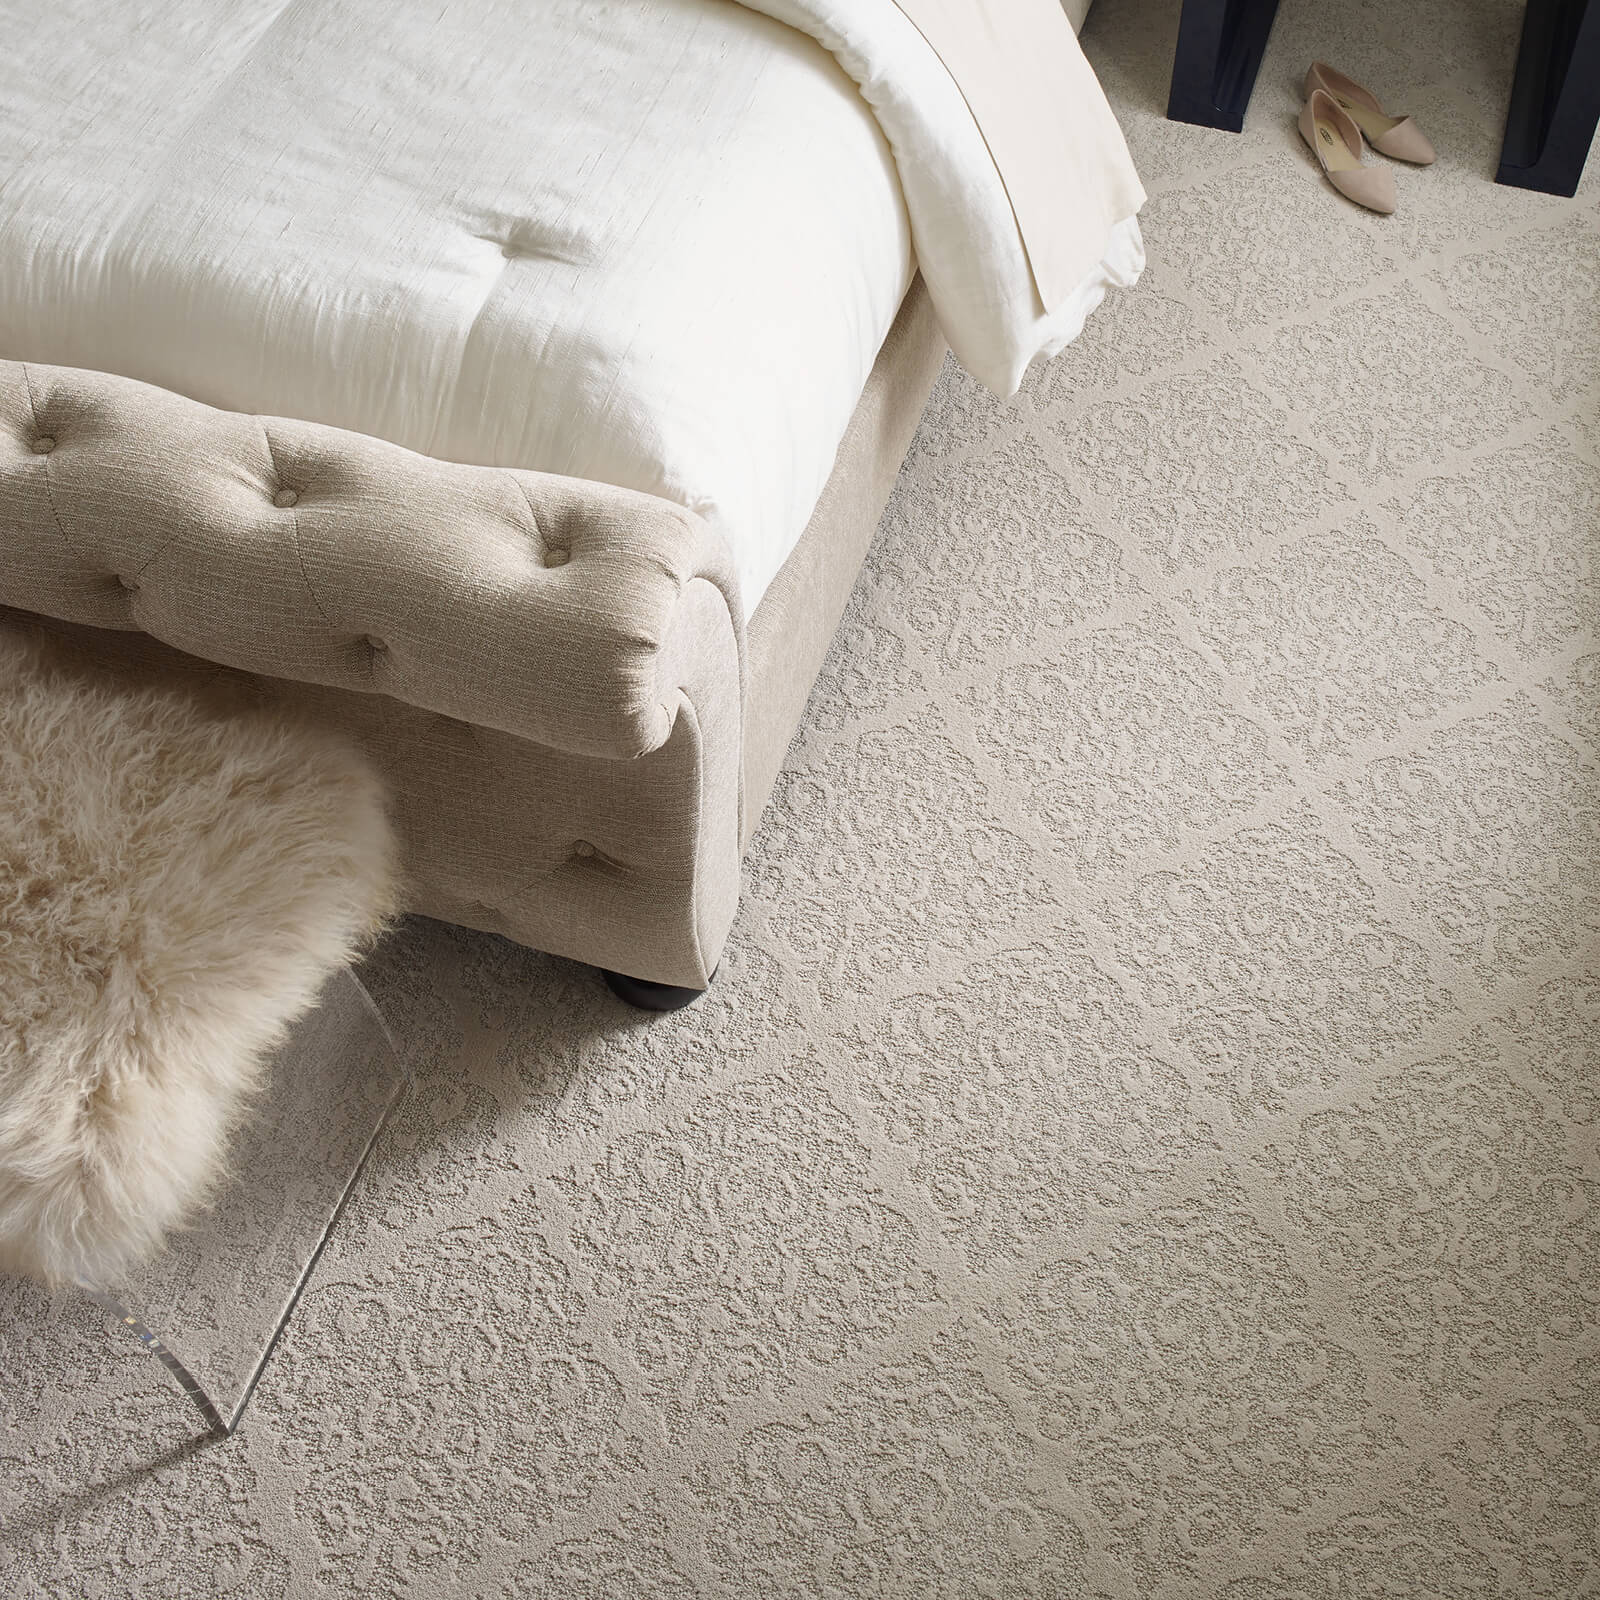 Carpet design | J/K Carpet Center, Inc